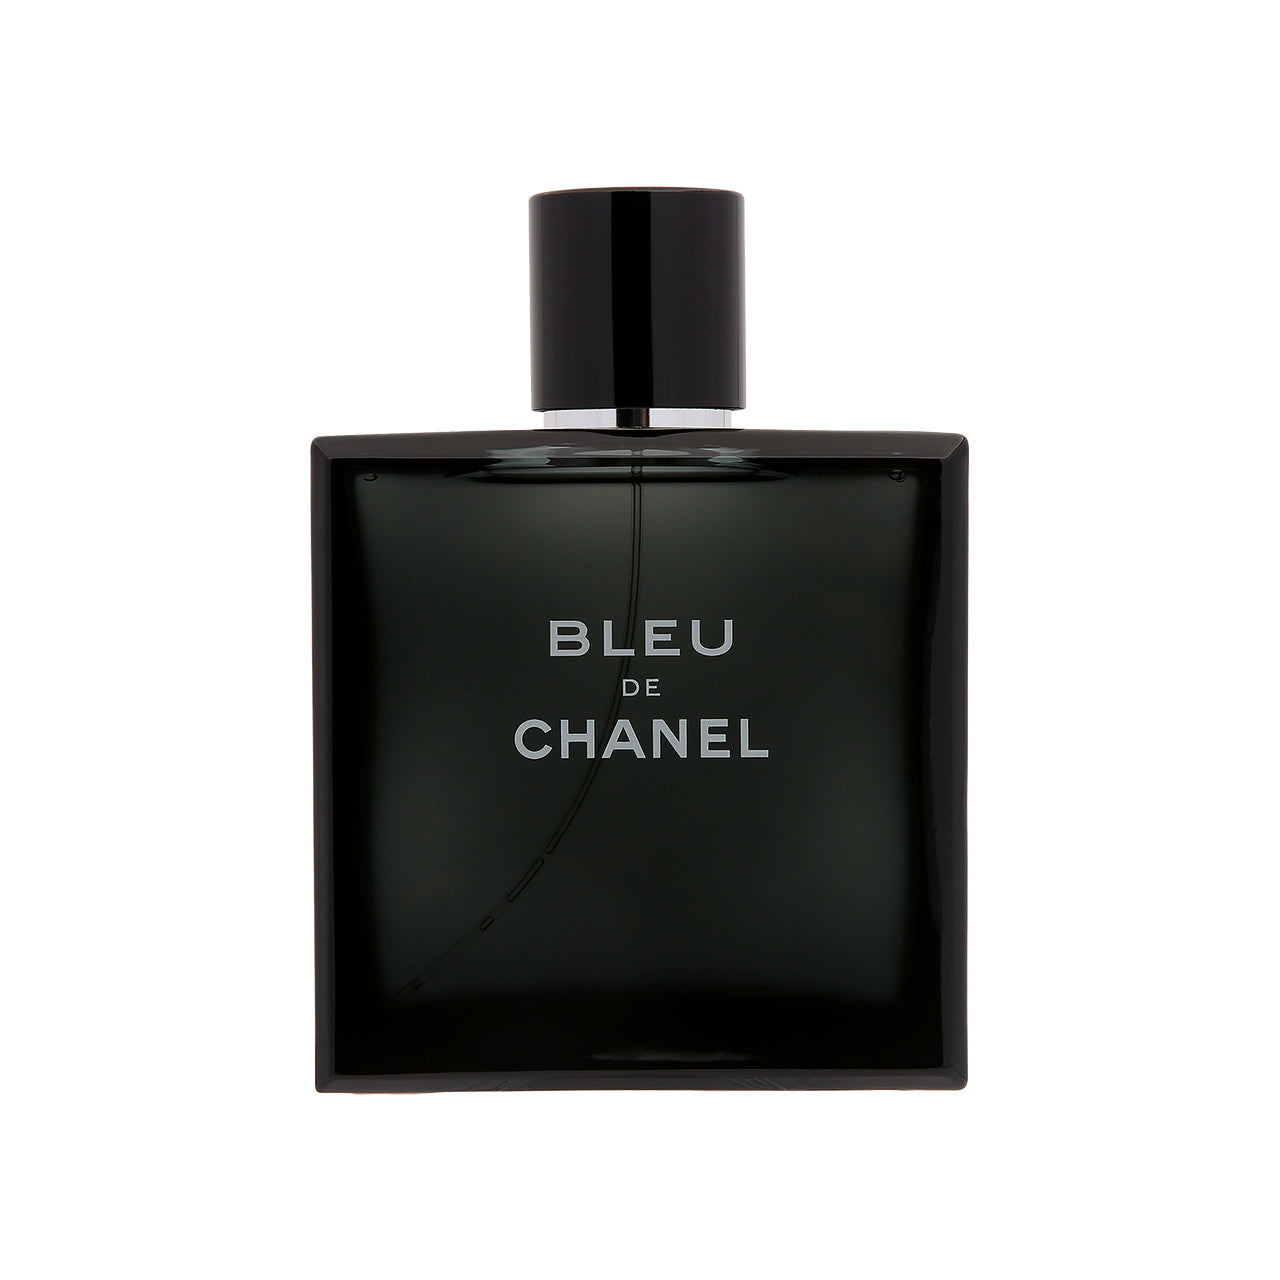 Chanel BLEU DE CHANEL Eau De Toilette Spray 100ml